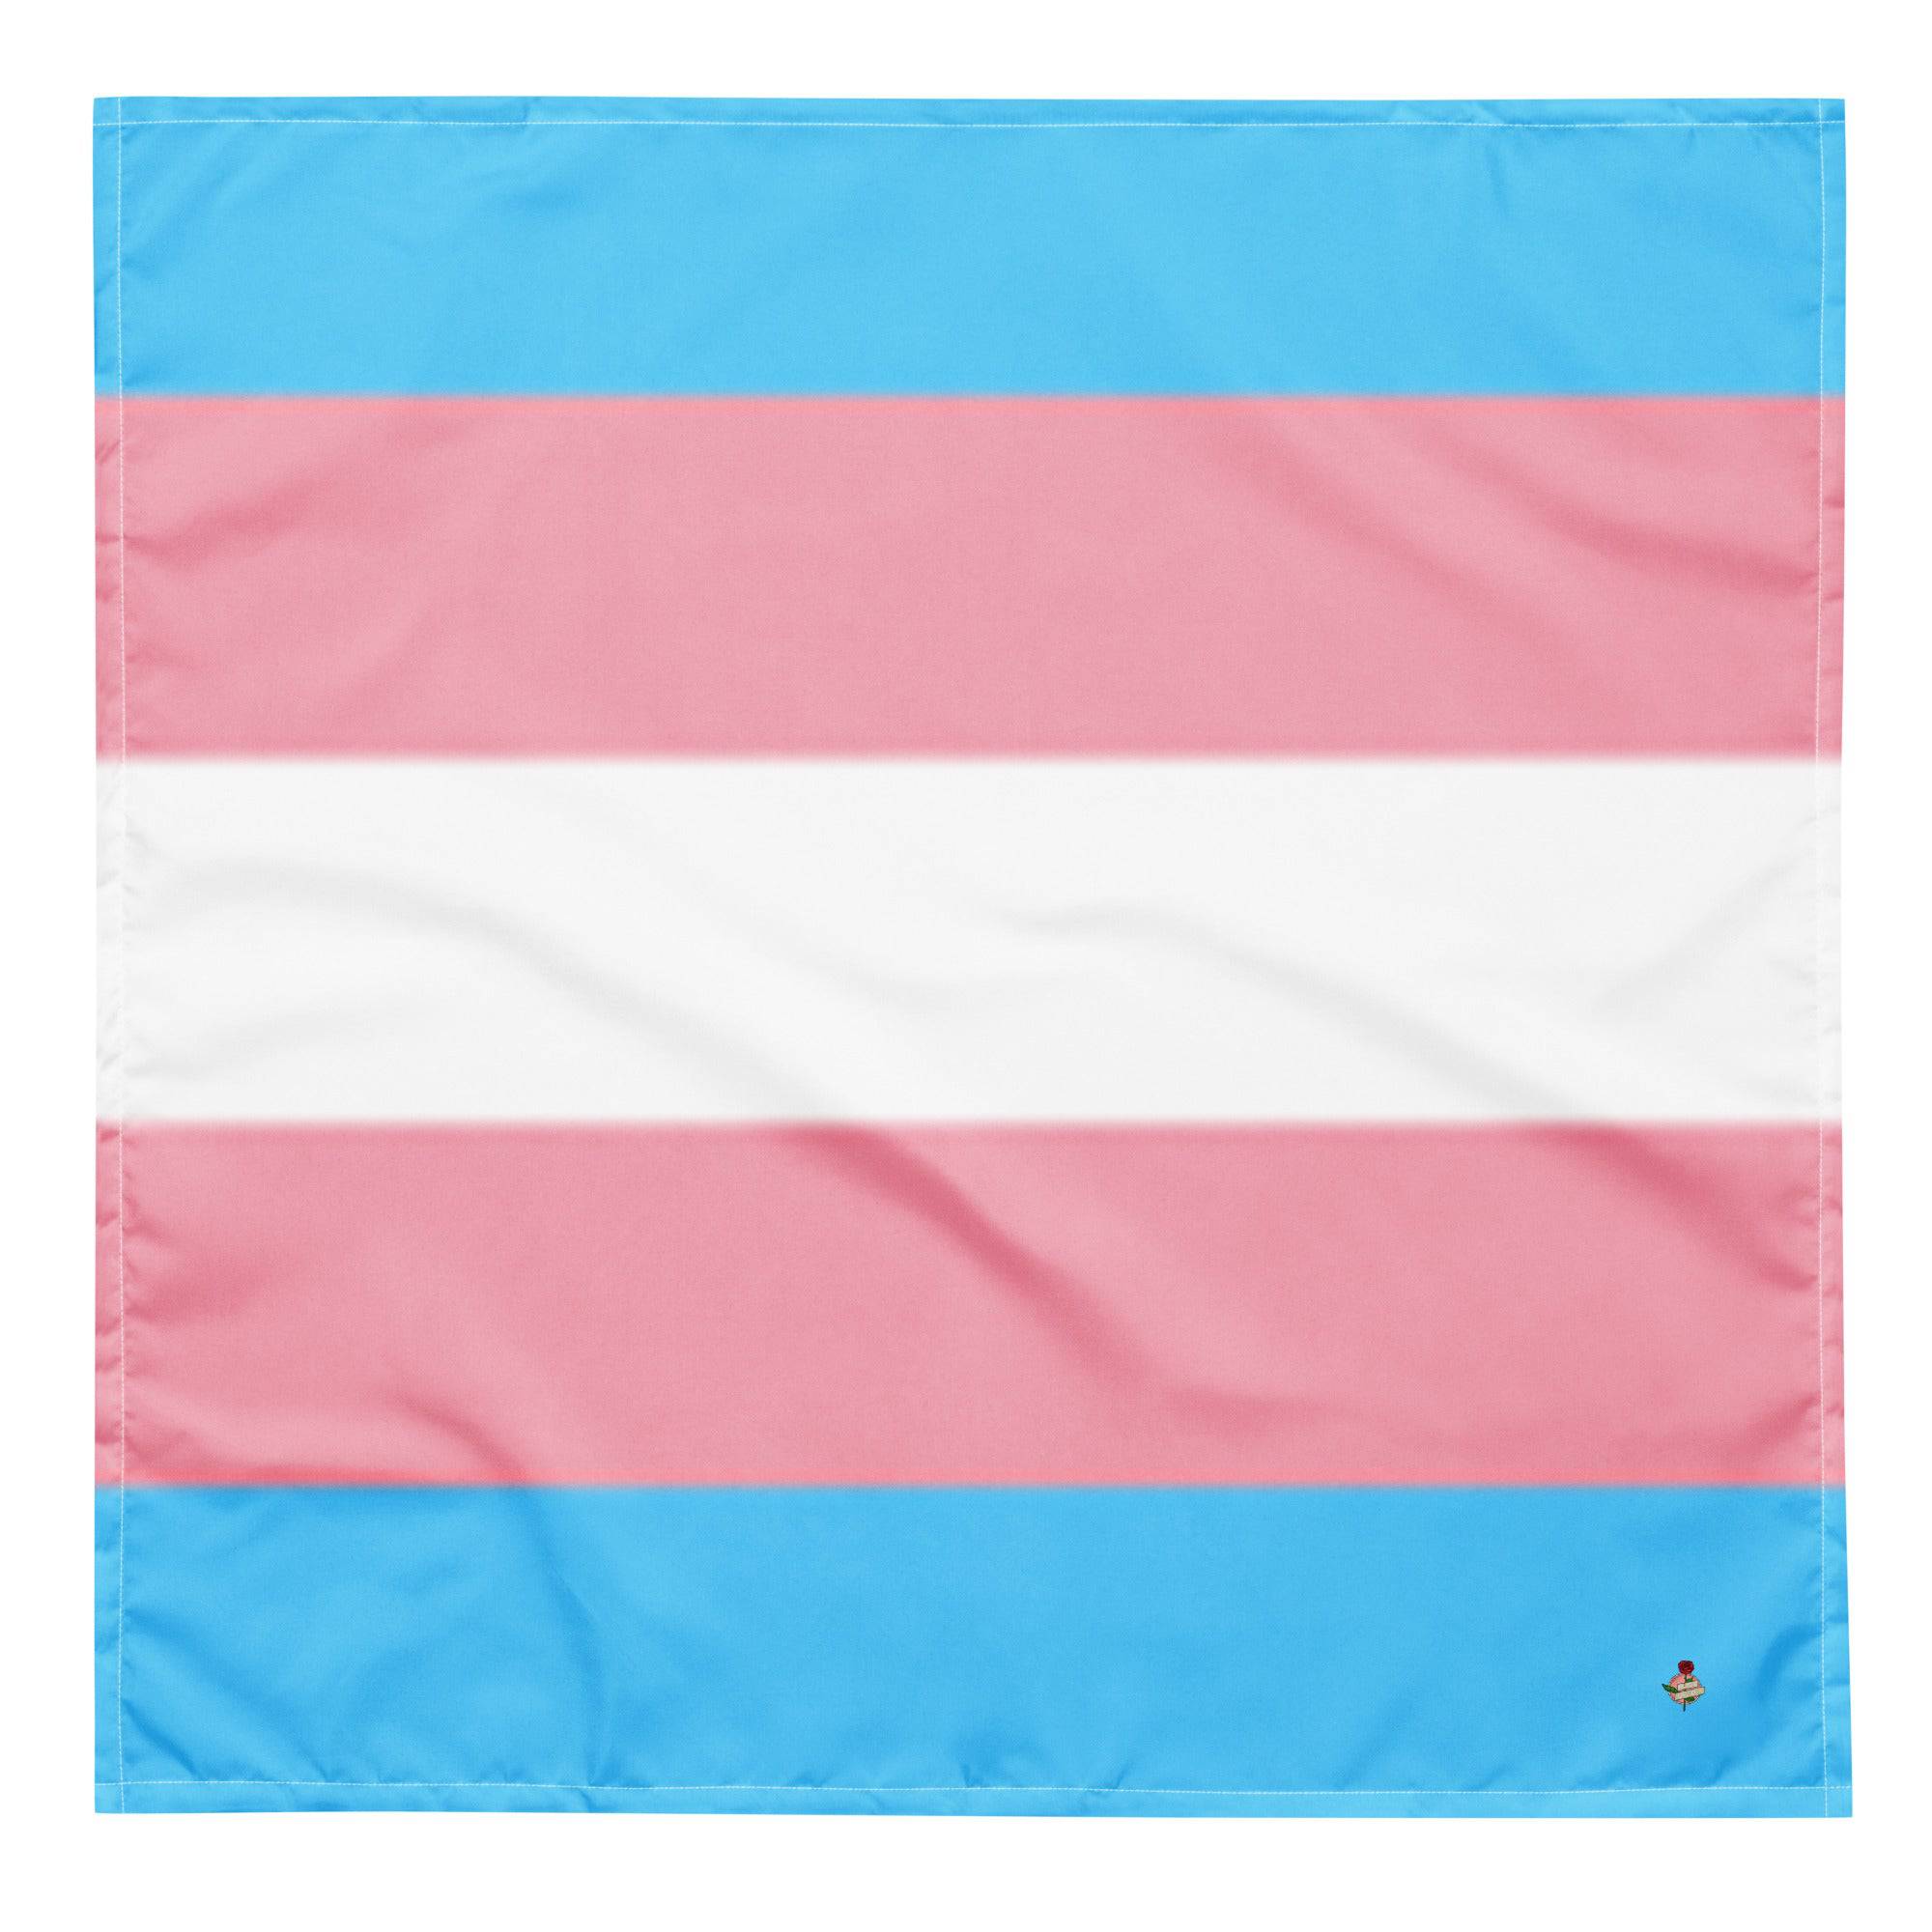 Trans Pride bandana